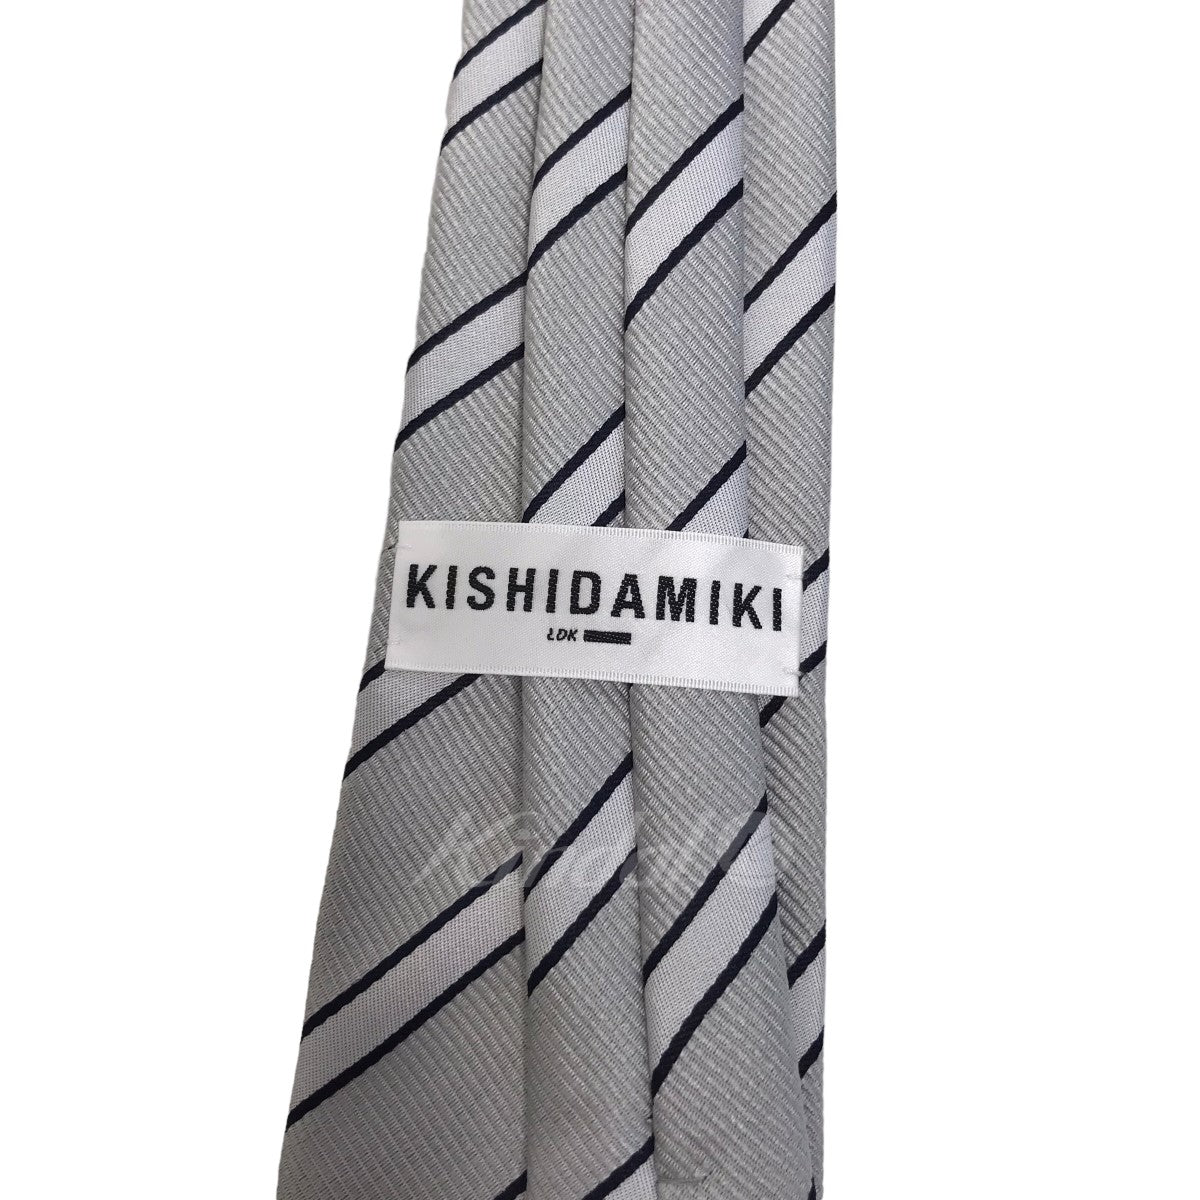 KISHIDAMIKI(キシダミキ) 「chain tie」チェーンタイ